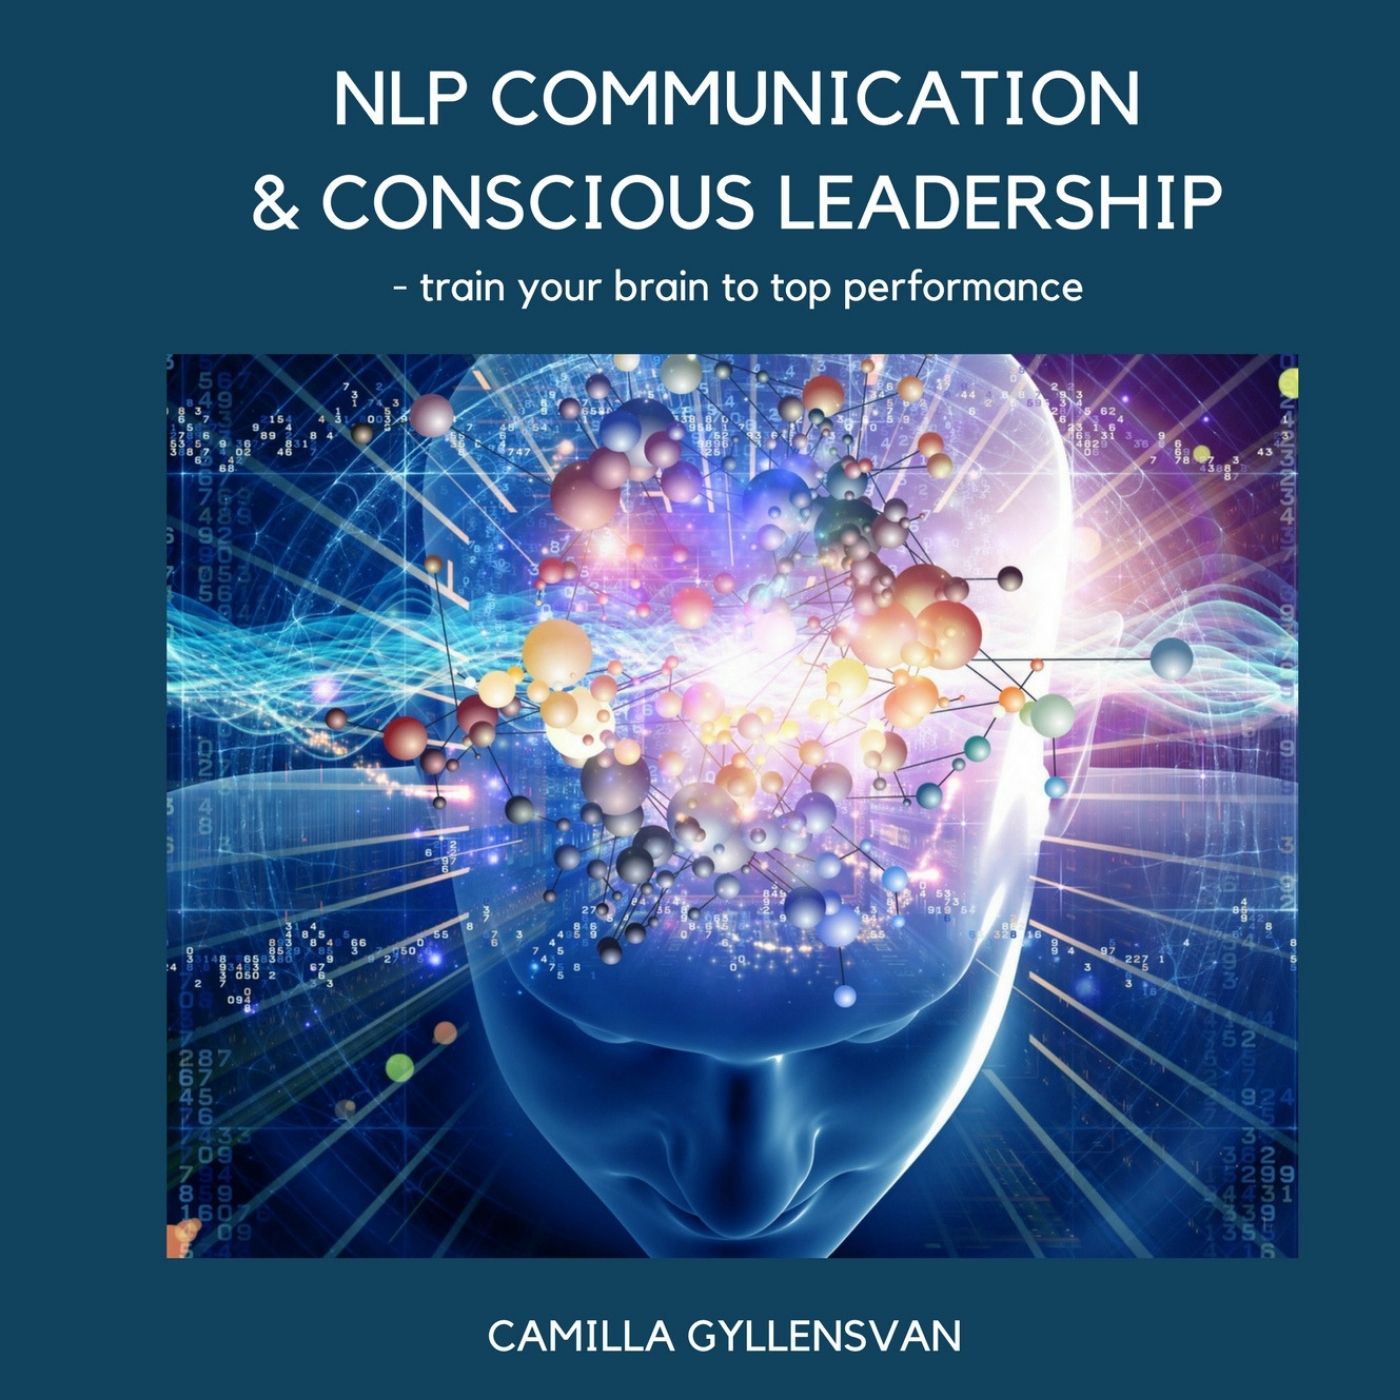 NLP Communication & conscious leadership, train your brain to top performance , ljudbok av Camilla Gyllensvan